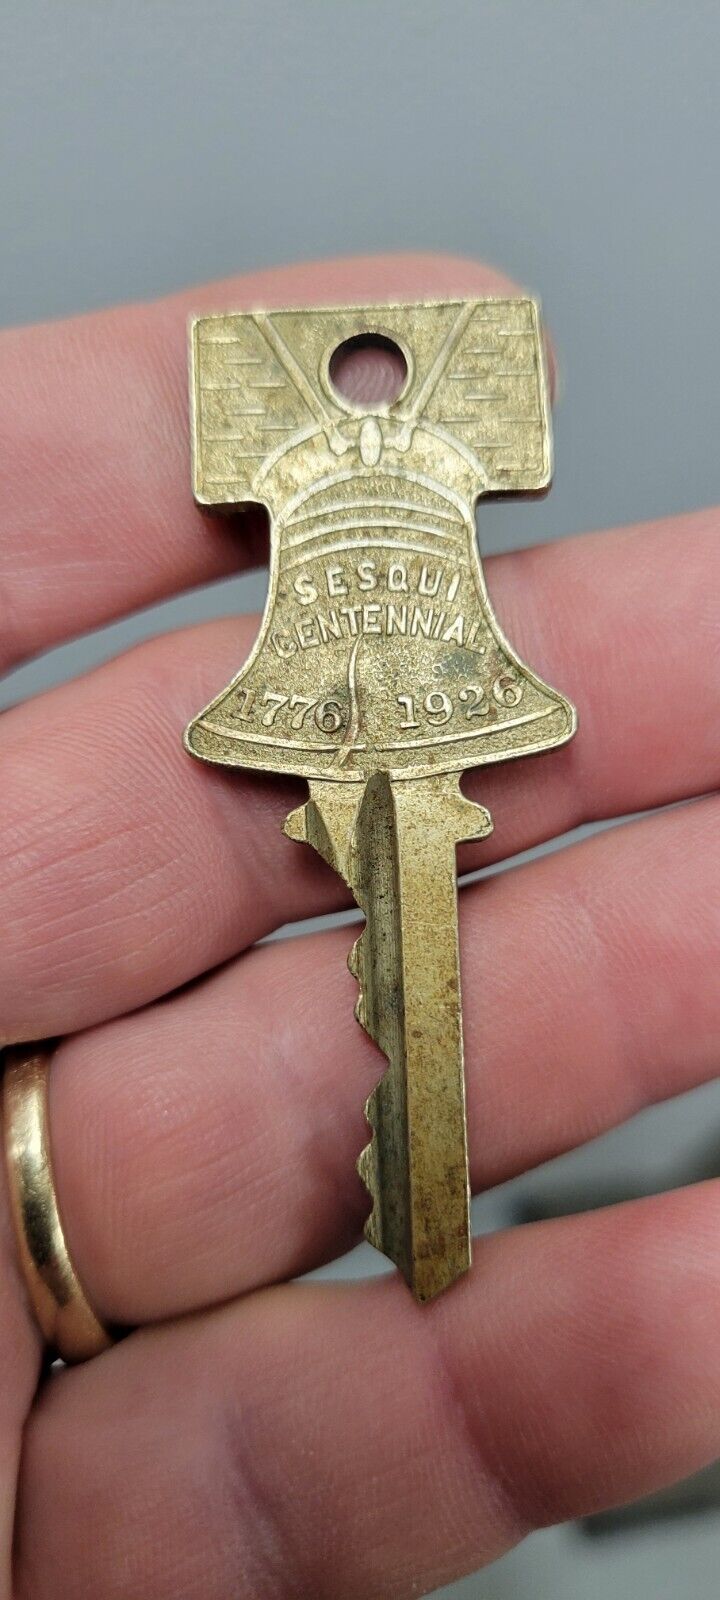 Rare Vintage 1920s Sesqui Centennial 1776-1926 Philadelphia PA Bell Shaped Key